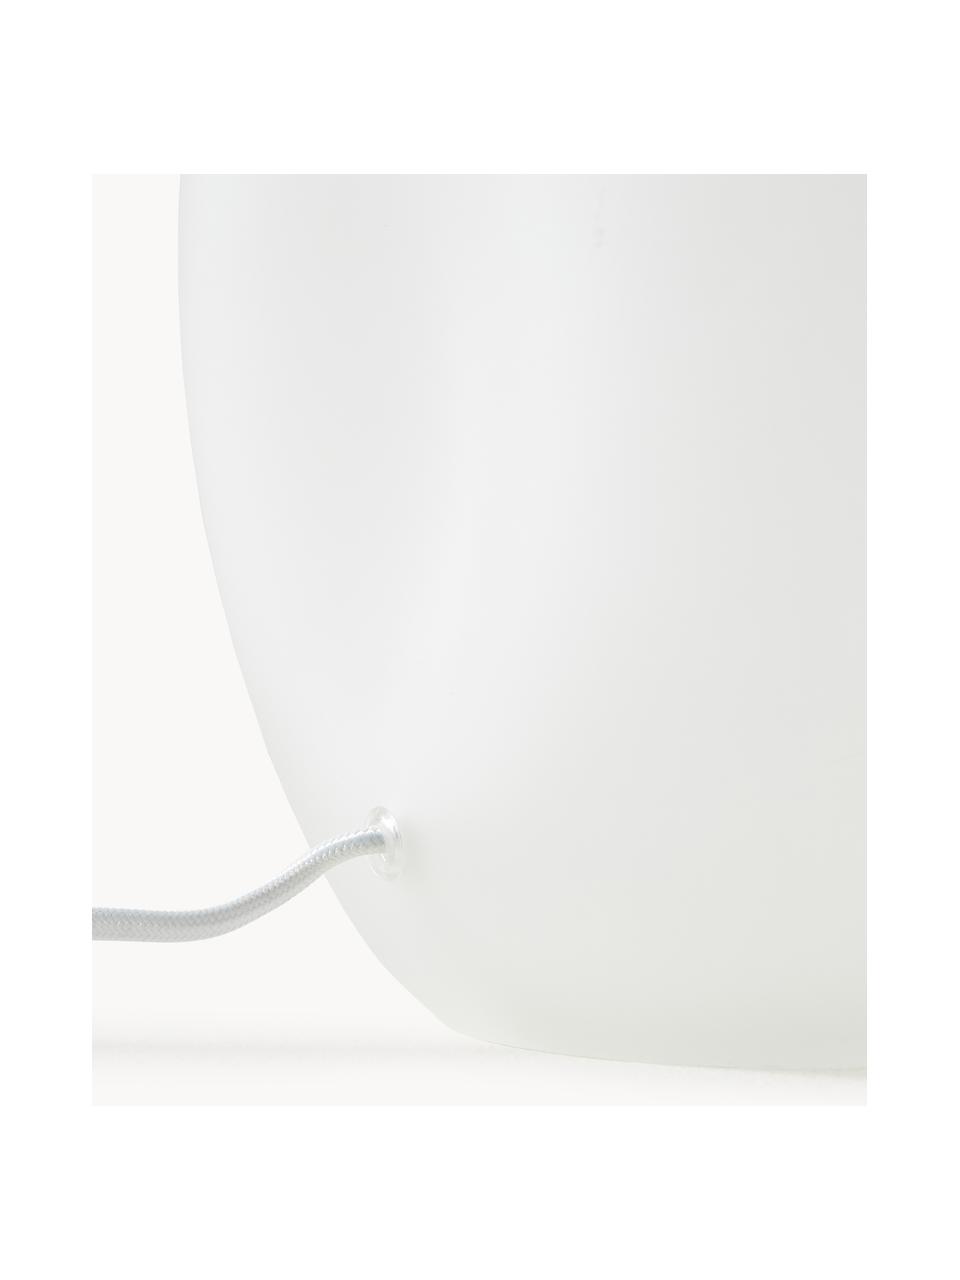 Grote tafellamp Leia met een semi-transparante glazen voet, Lampenkap: textiel, Lampvoet: glas, Wit, Ø 30 x H 53 cm